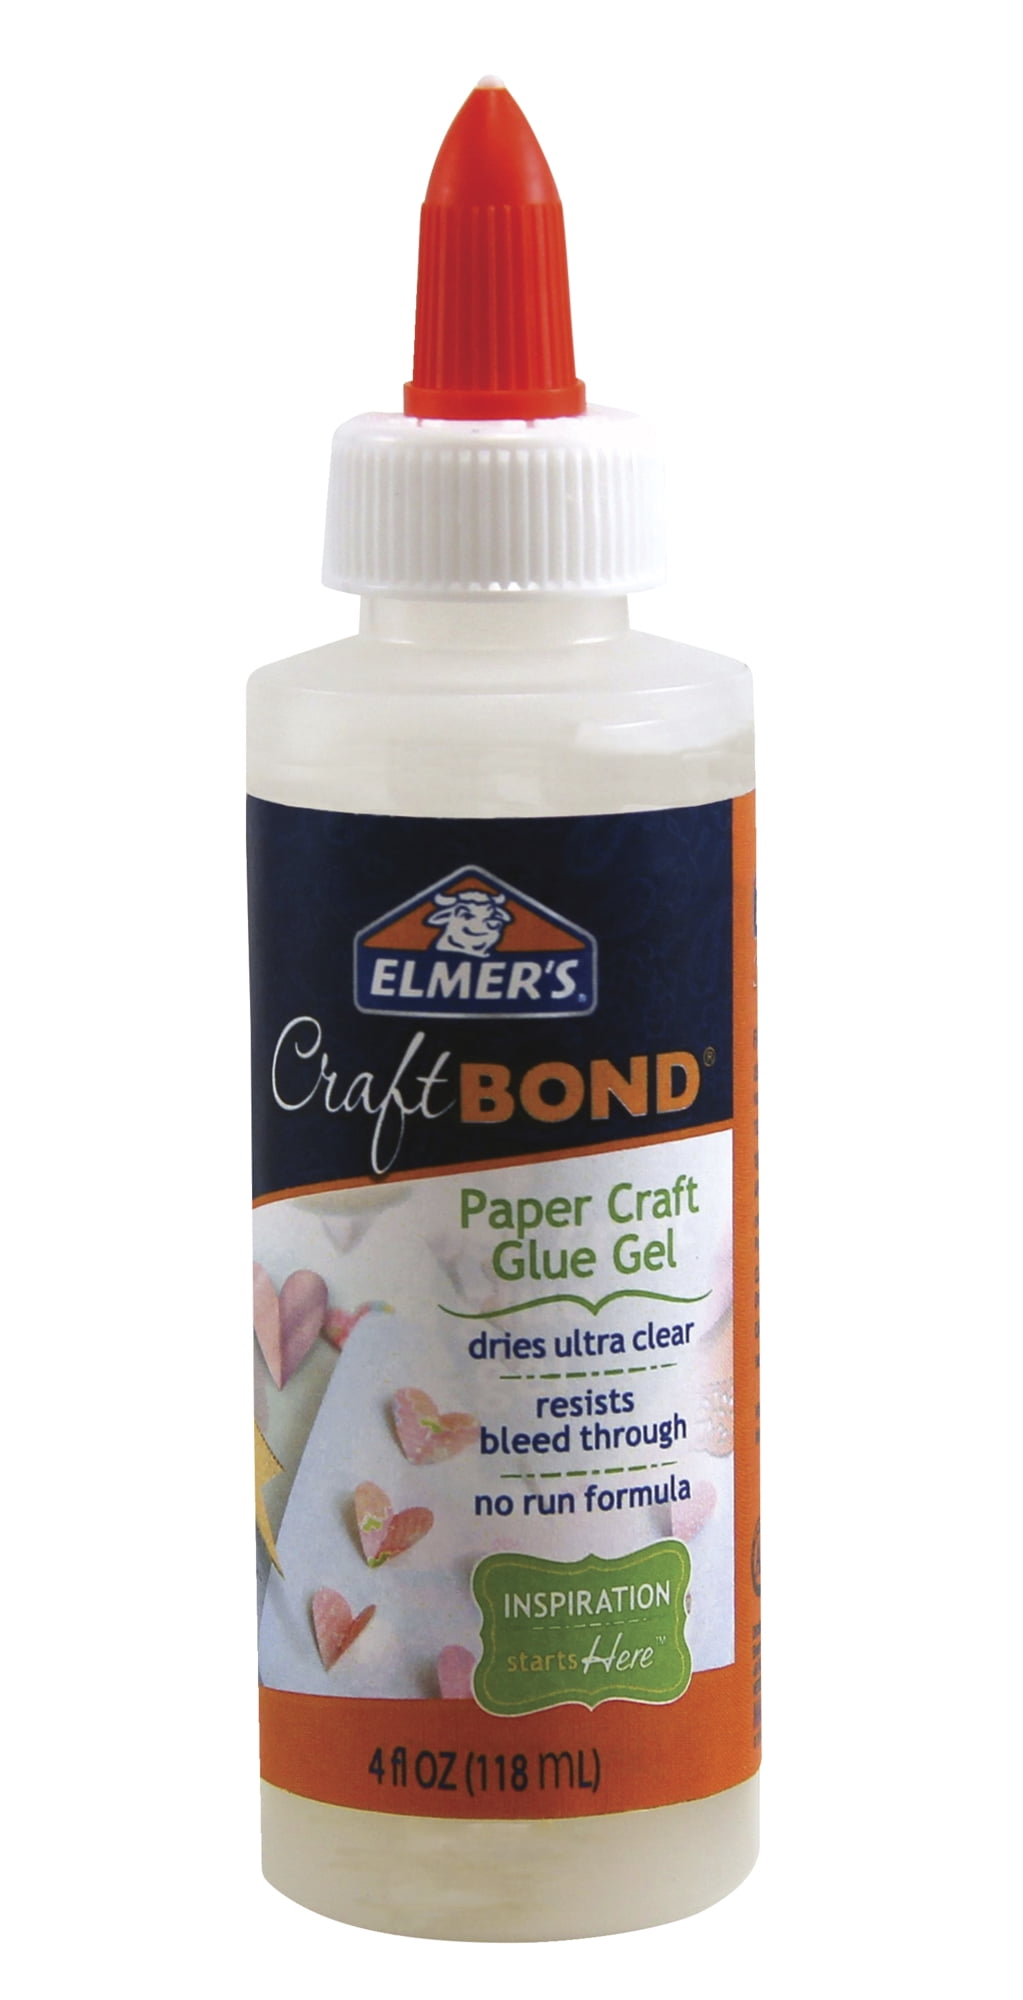 Elmer's Craft Bond Paper Craft Glue Gel, 4 oz.